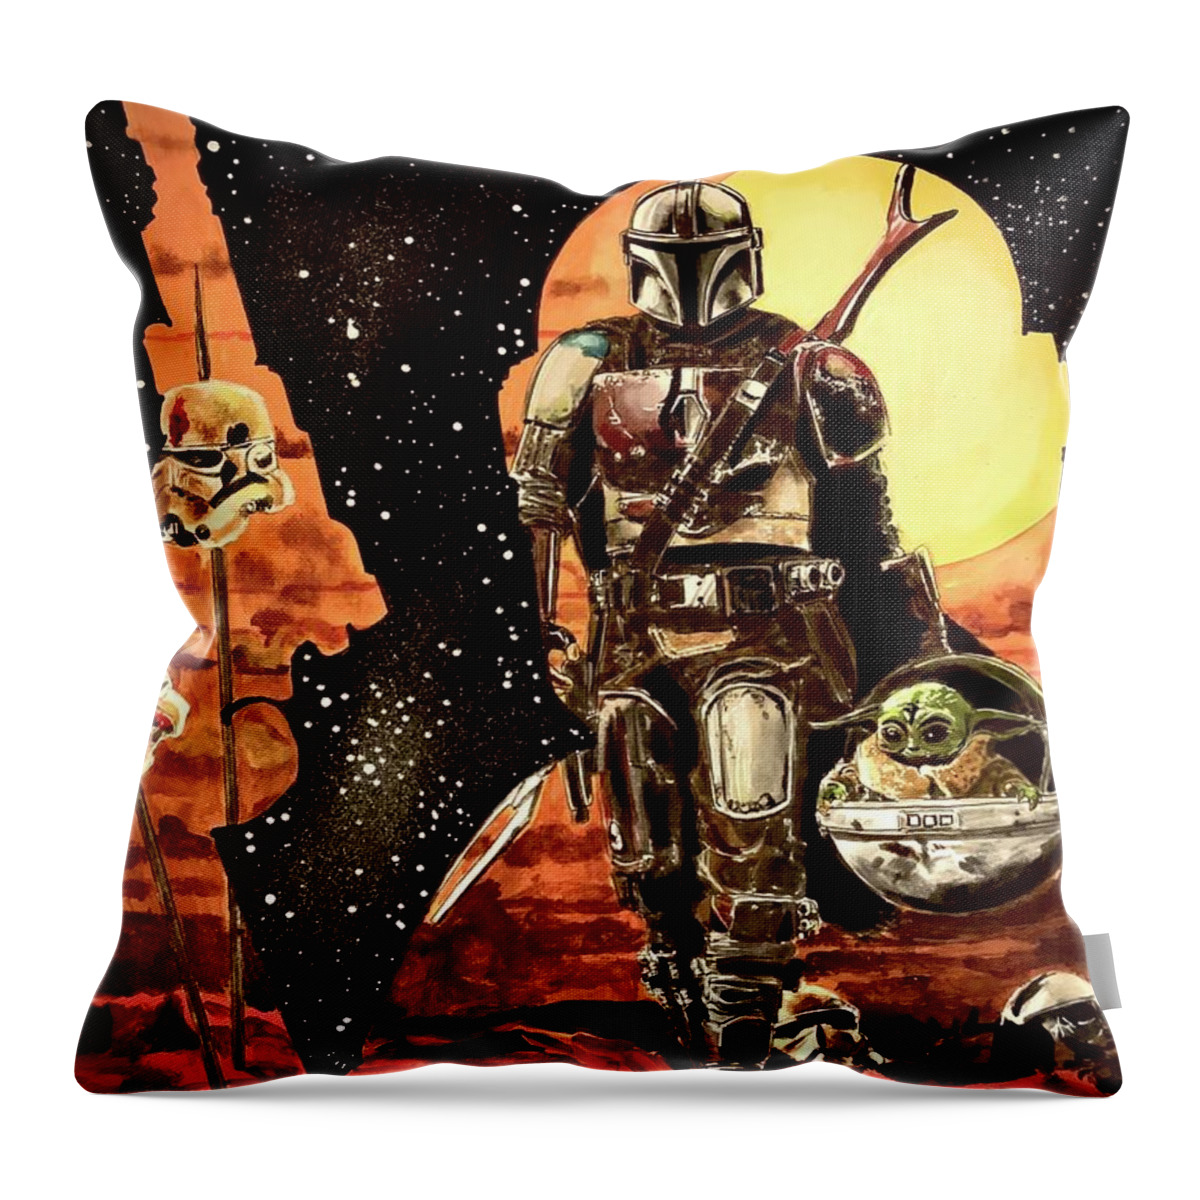 Star Wars Throw Pillow featuring the painting The Mandalorian by Joel Tesch